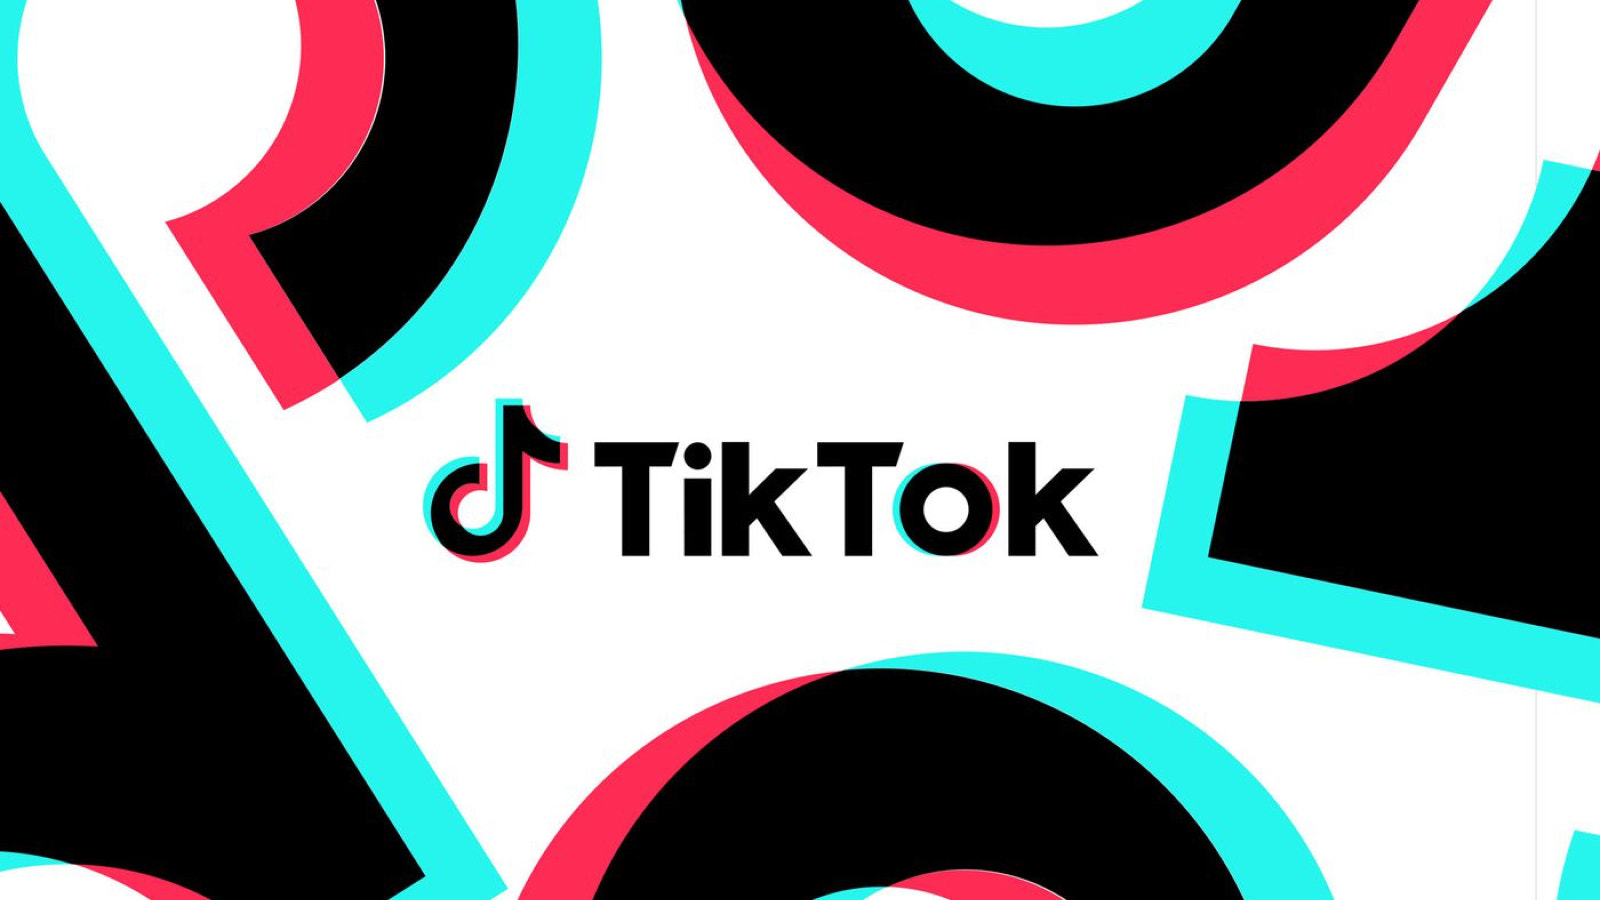 Galeria de vídeos TikTok